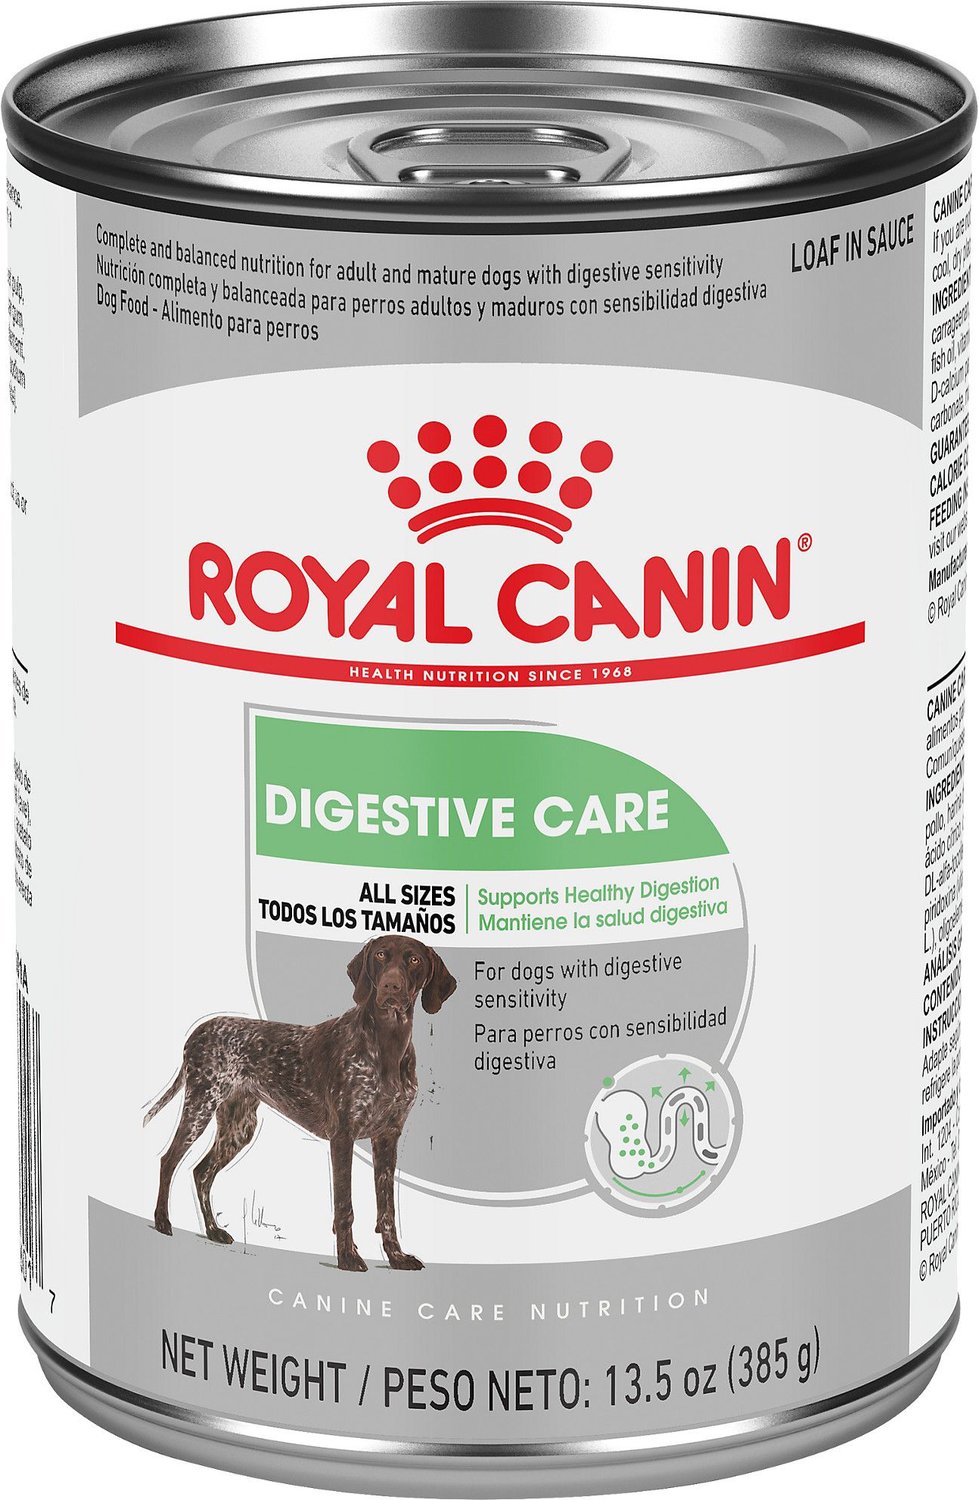 digestive care dog food